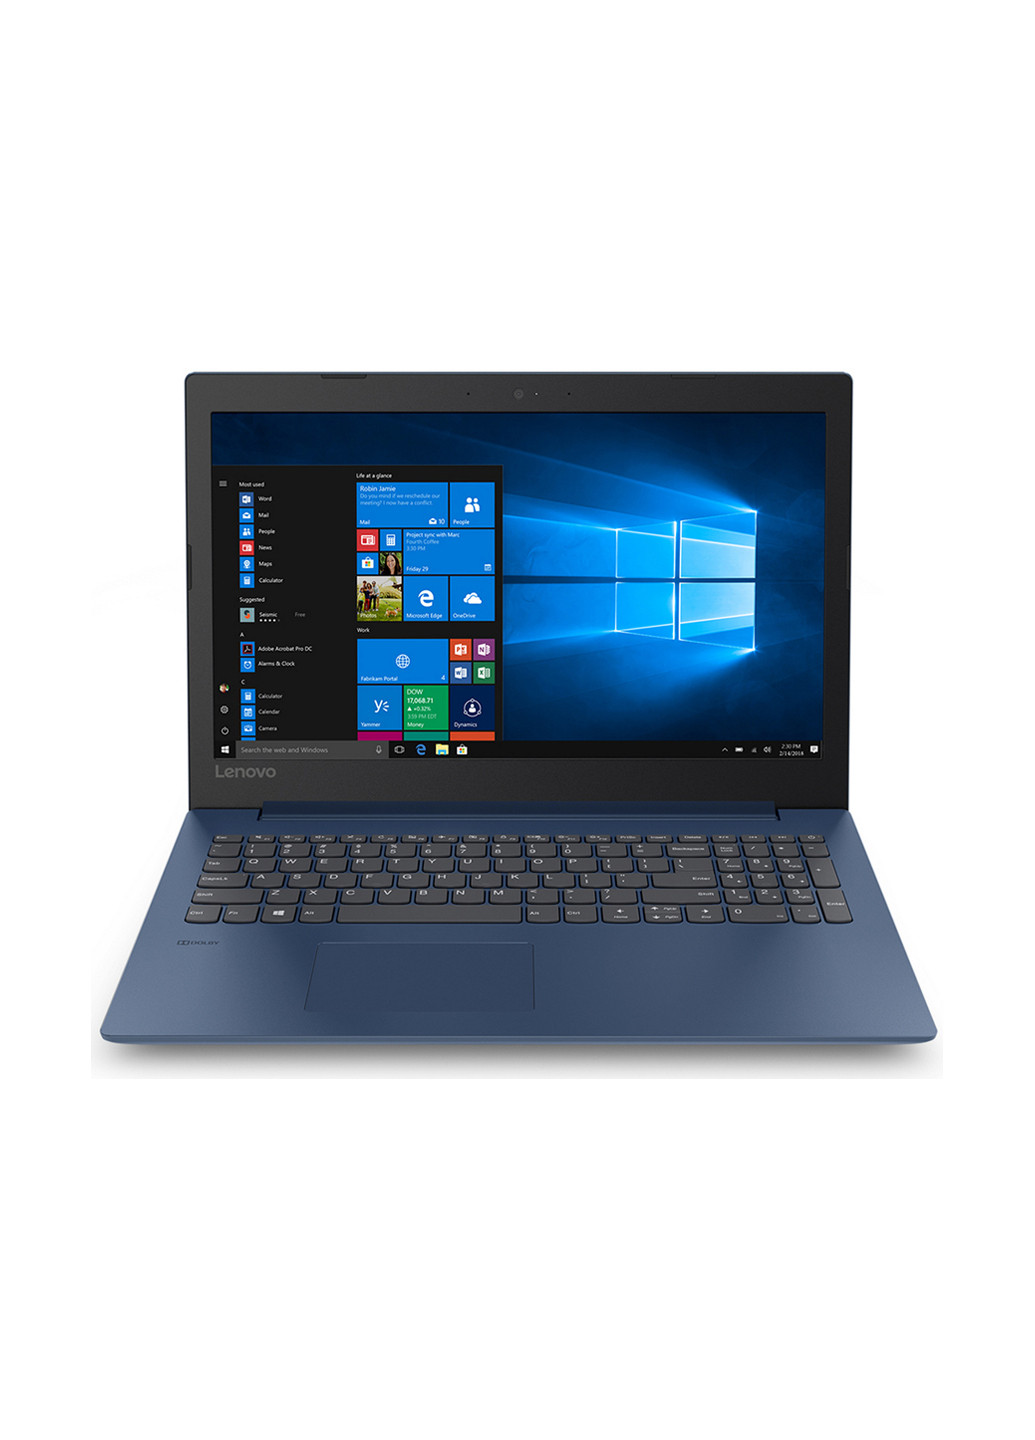 Ноутбук Lenovo ideapad 330-15 (81dc012cra) mid night blue (132994128)